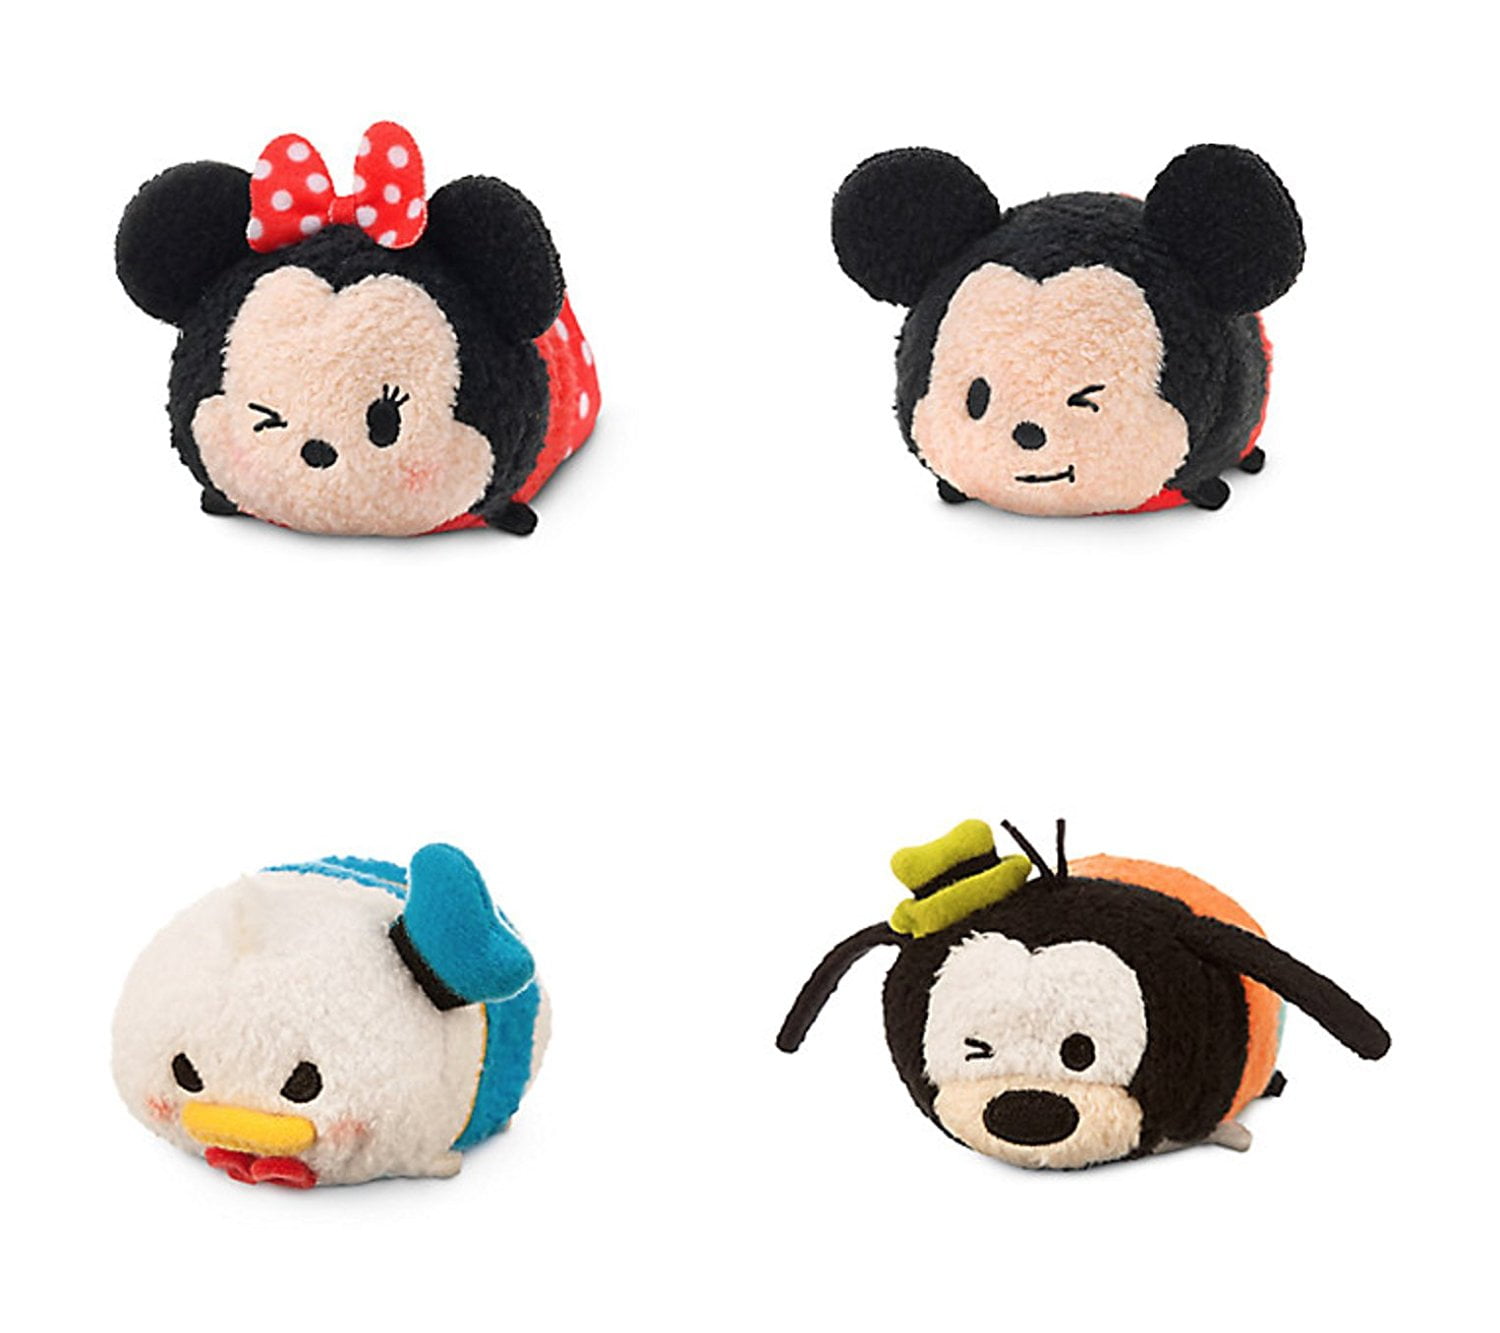 3.5" Mickey Mouse BIRTHDAY mini Soft Tsum Tsum plush Stuffed Toy Doll Great Gift 